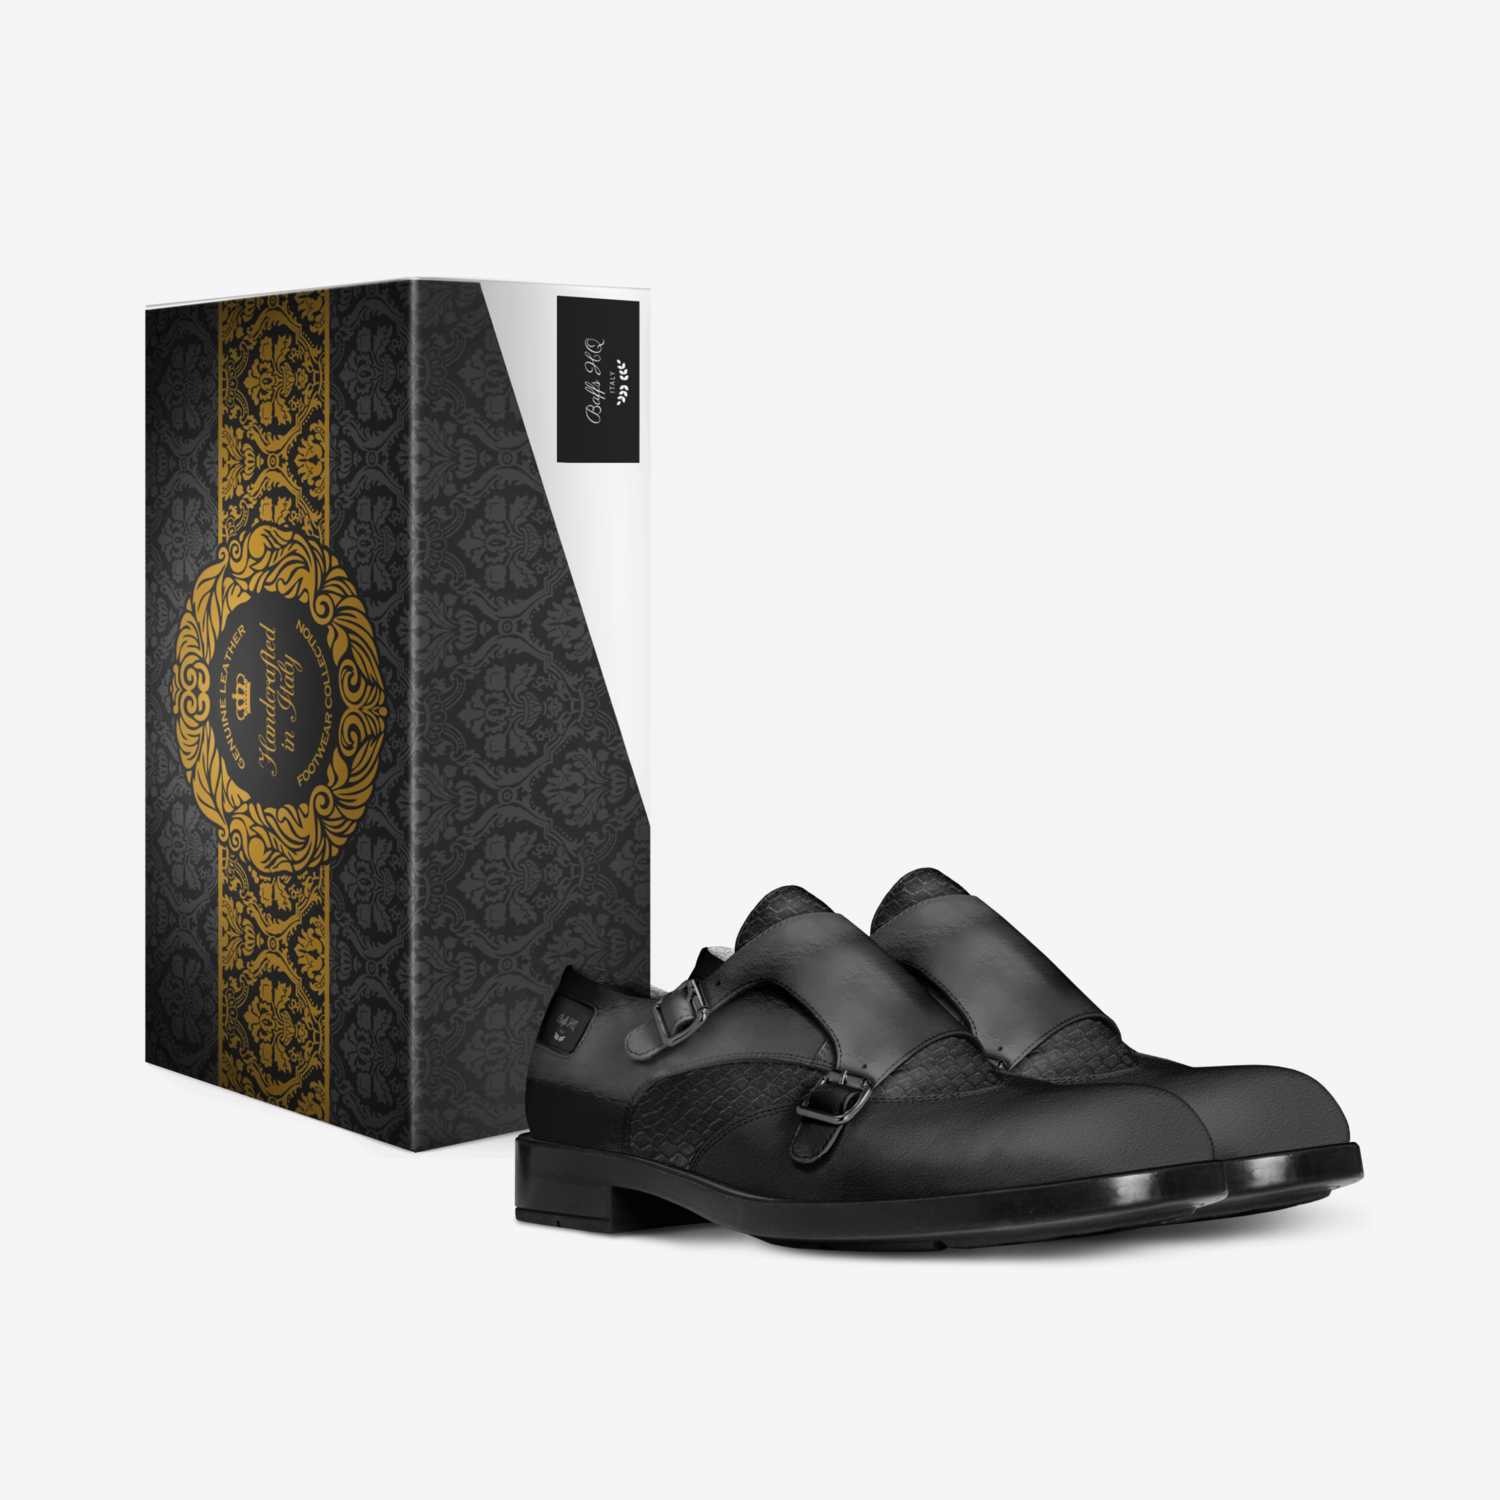 Baffs HQ custom made in Italy shoes by Luca Onyebueke | Box view